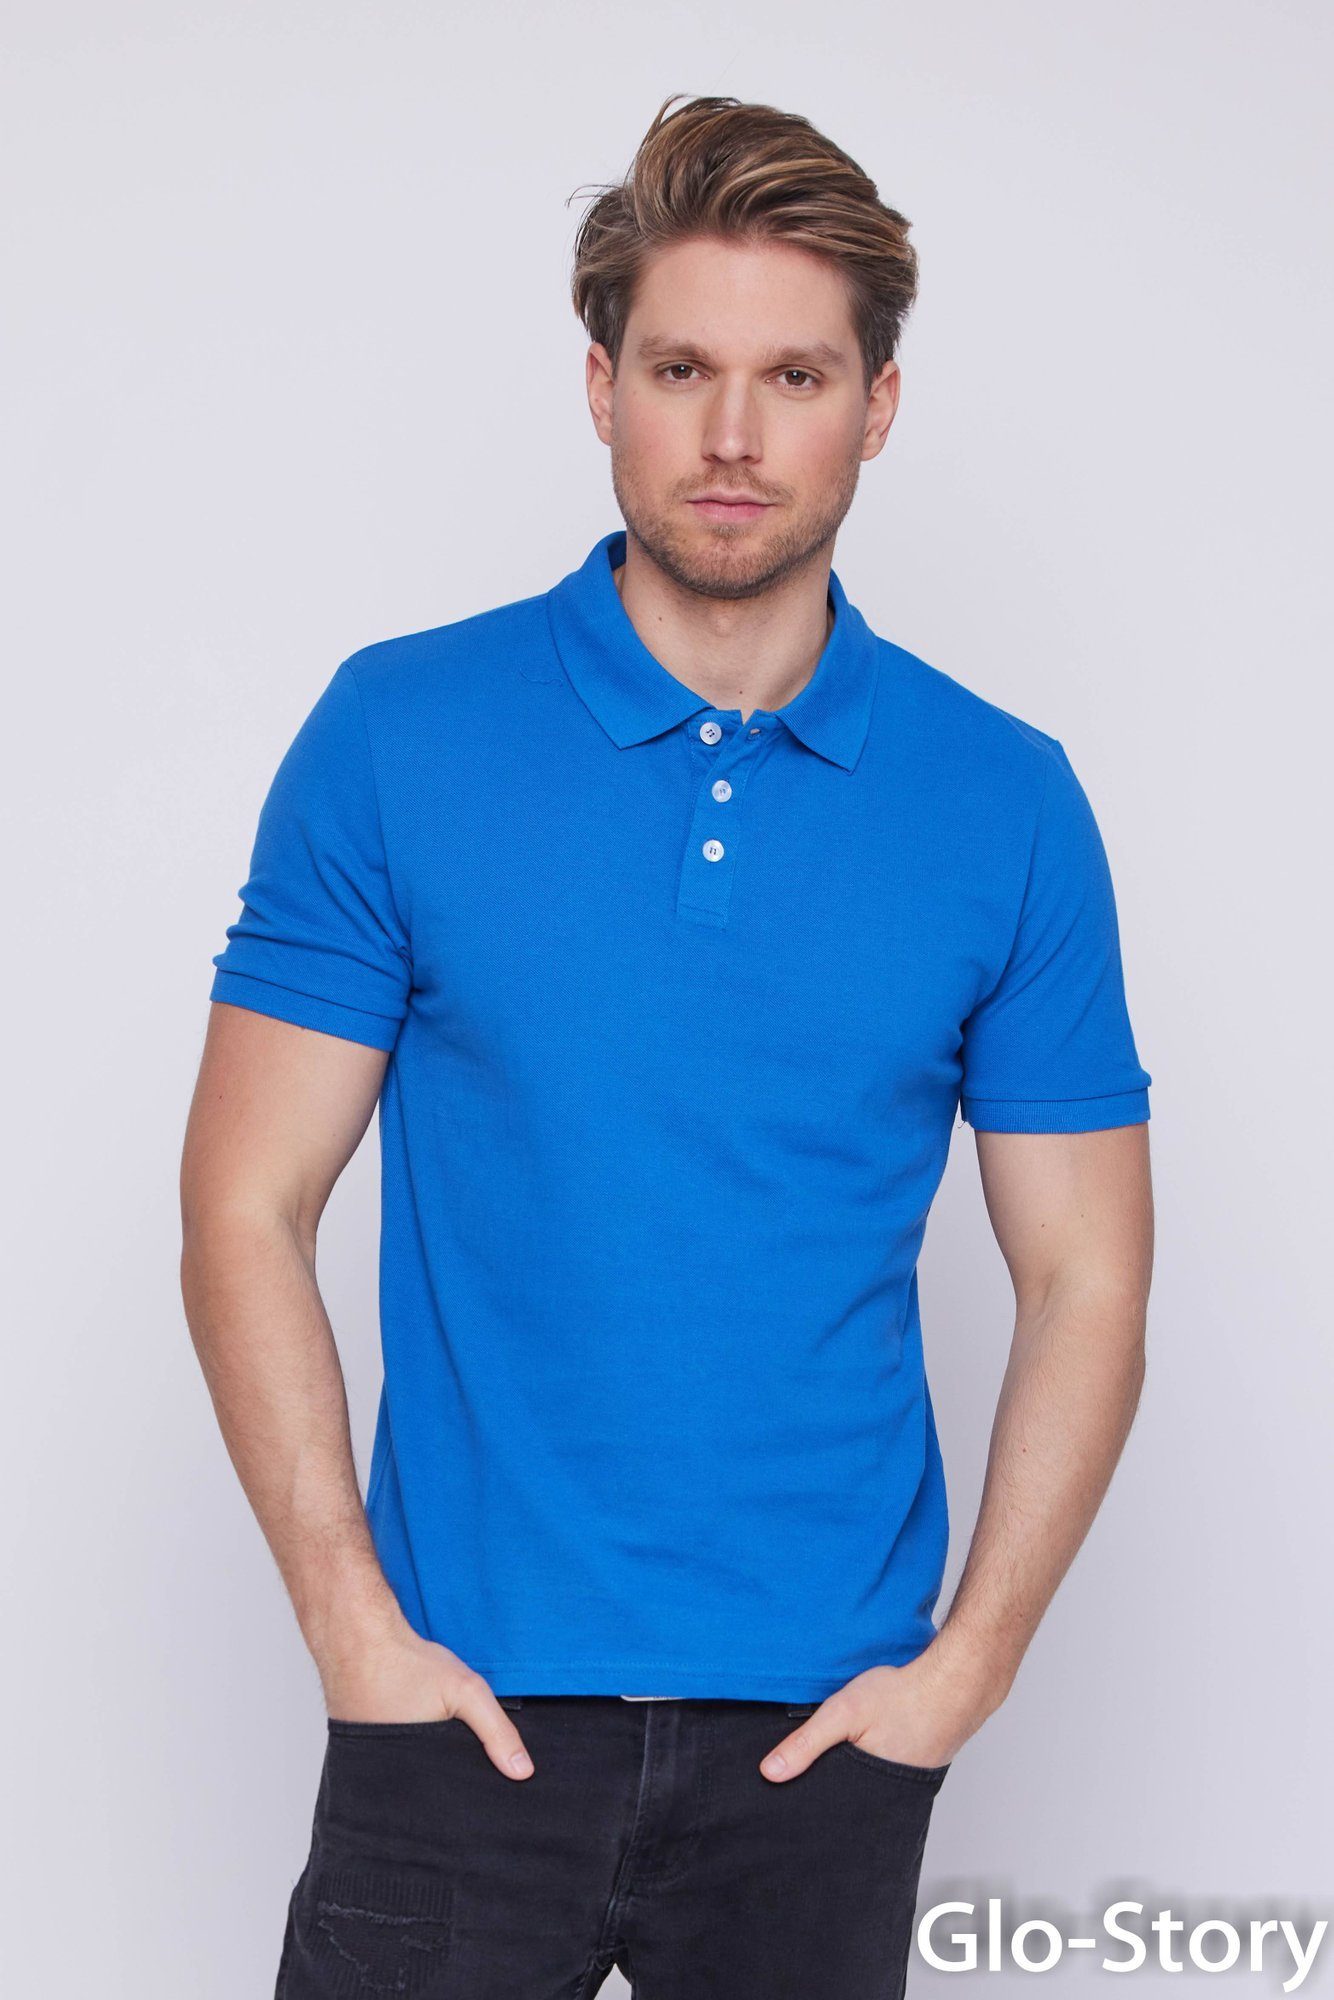 GLO-STORY Poloshirt Herren Kurzarm Basic Sapphire-Blau Regular Polo GLO-STORY Polohemd Poloshirt Shirt